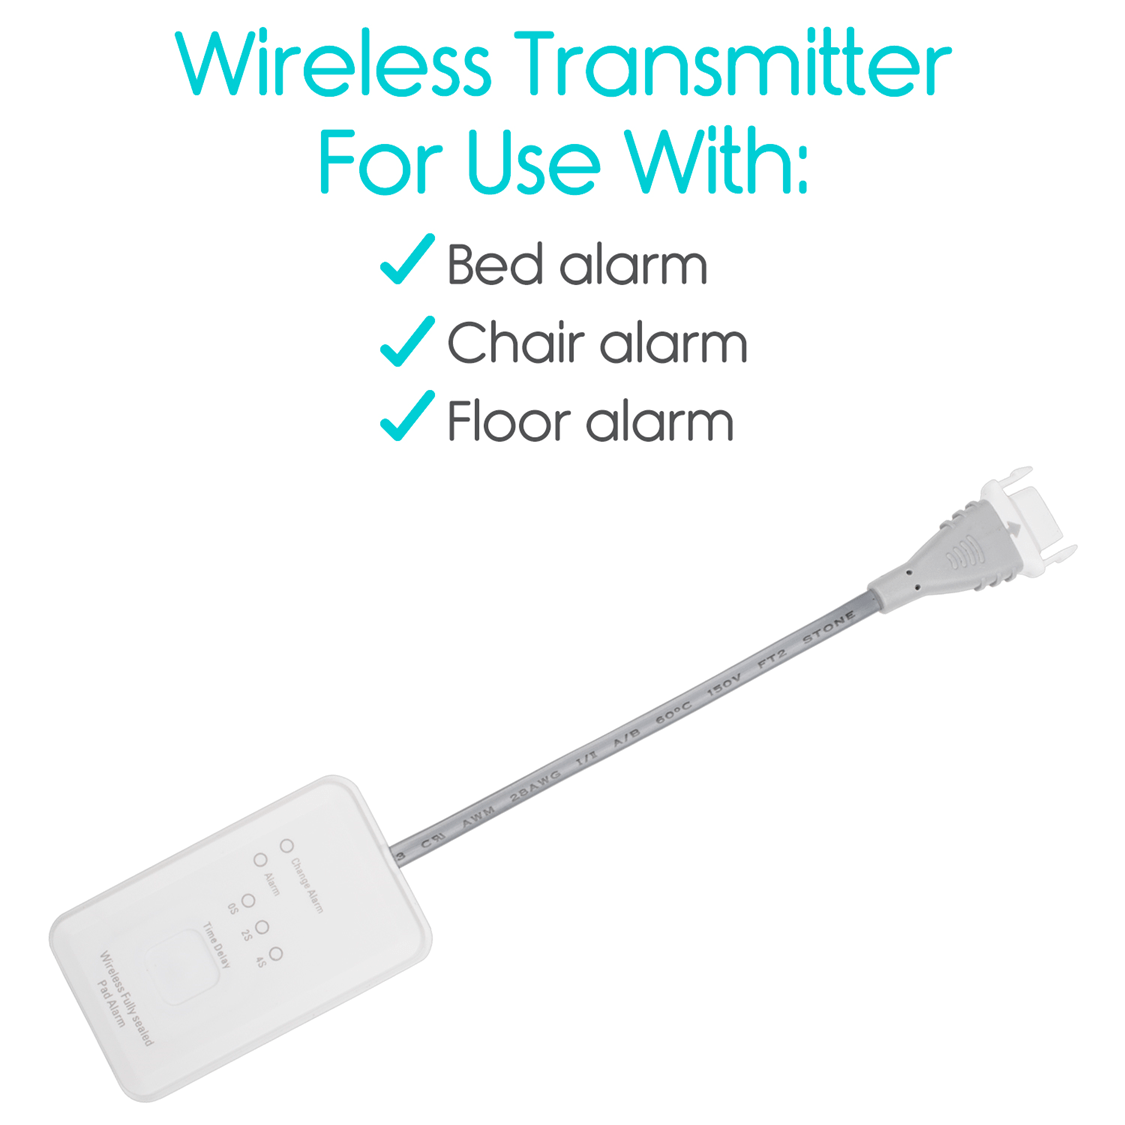 Wireless Floor Transmitter